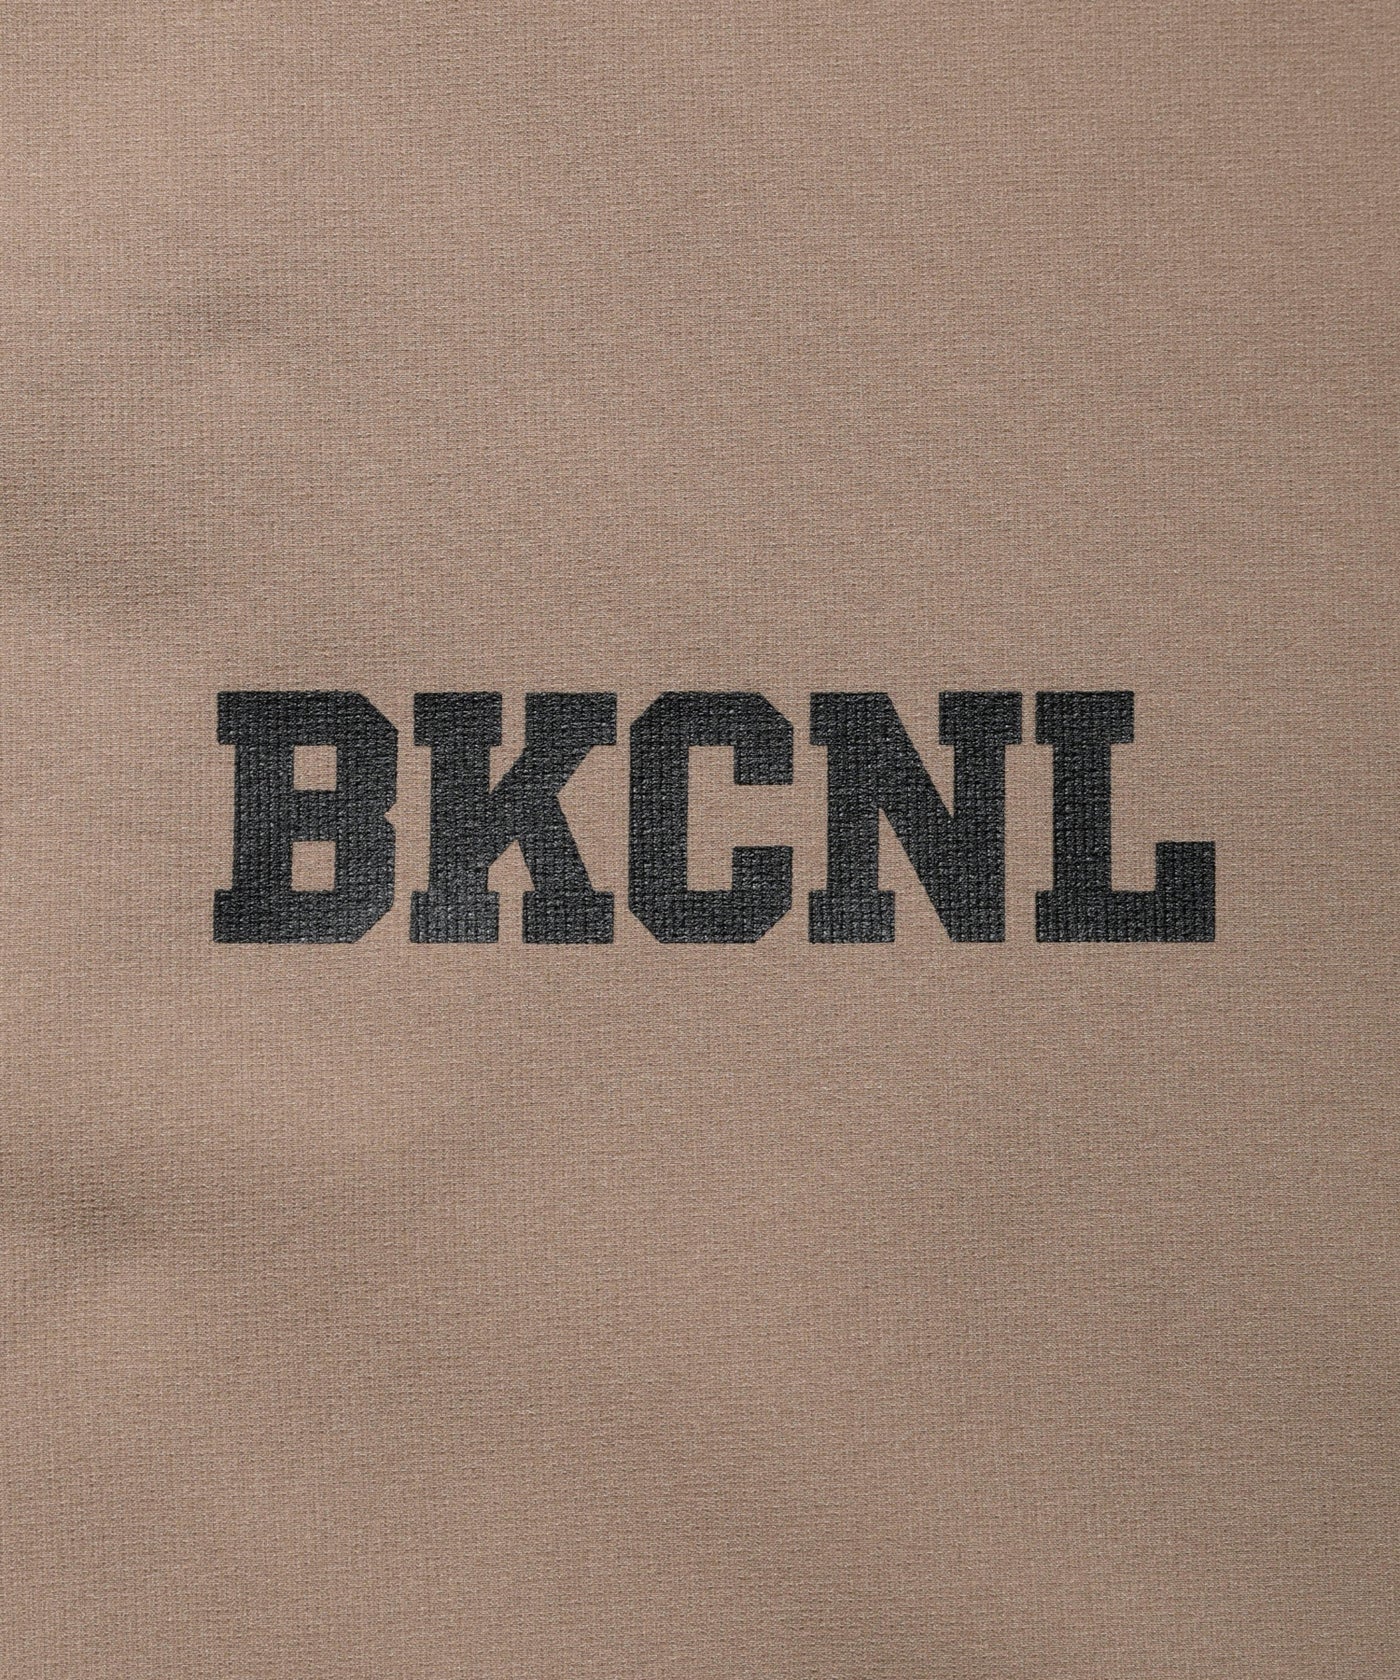 BKCNL T